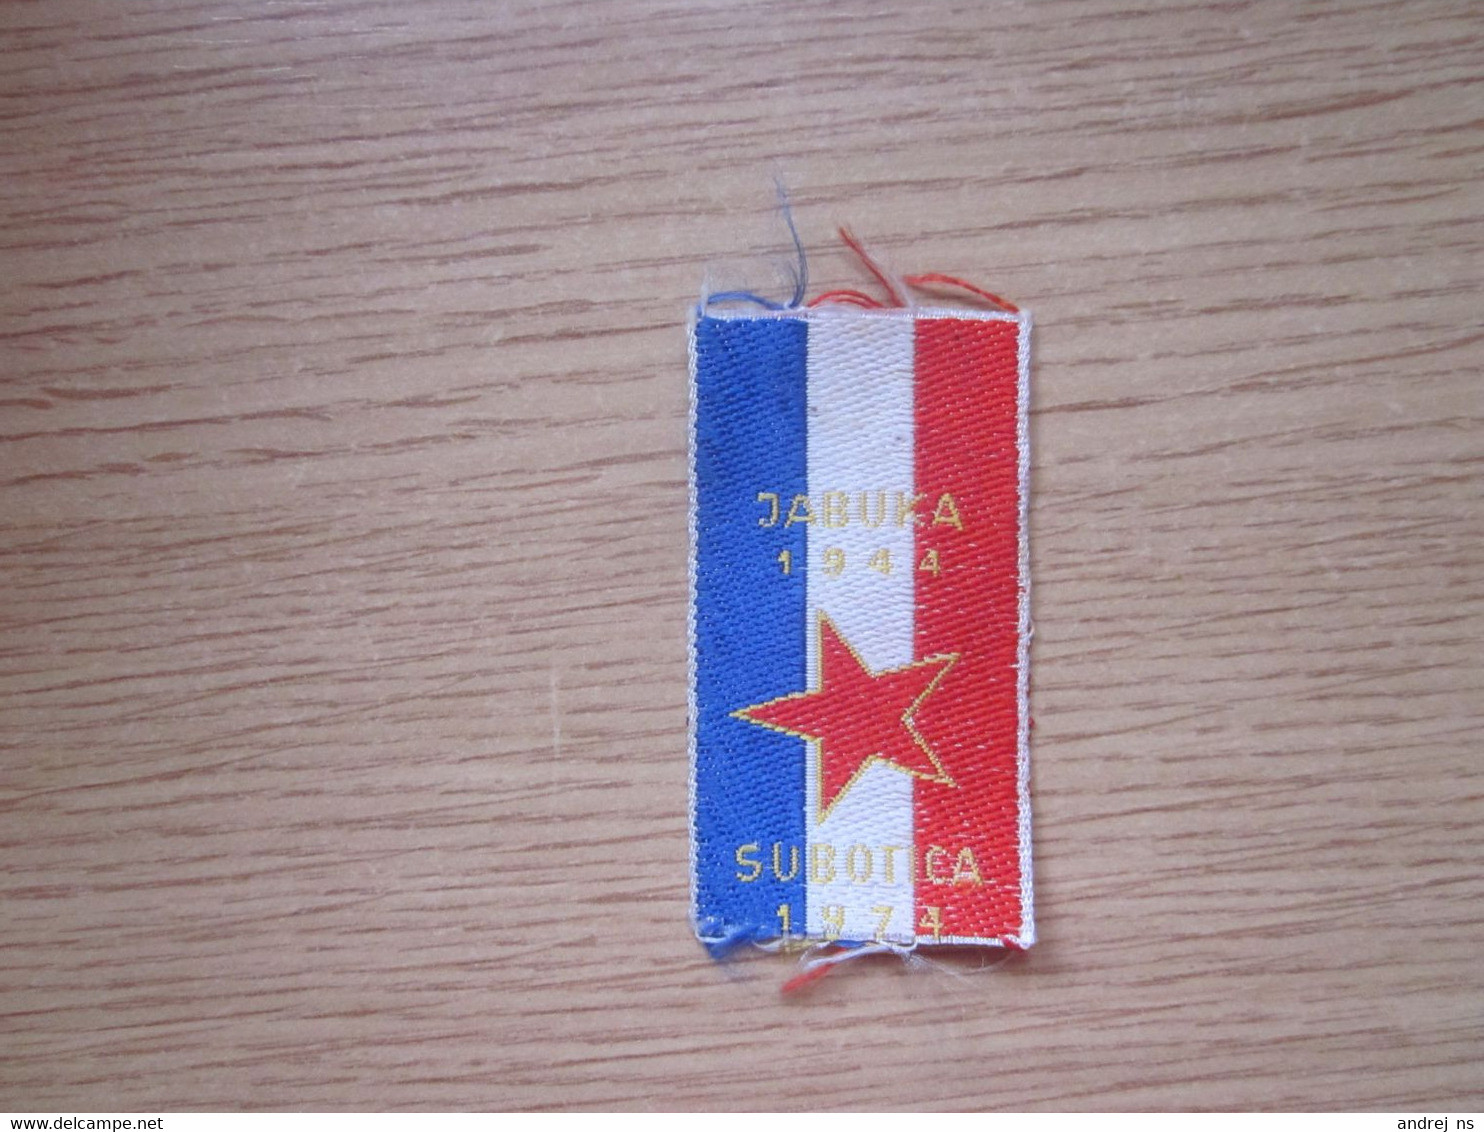 Small Flag Of Yugoslavia Jabuka 1944 Subotica 1974 3.2x5.5 Cm - Flags